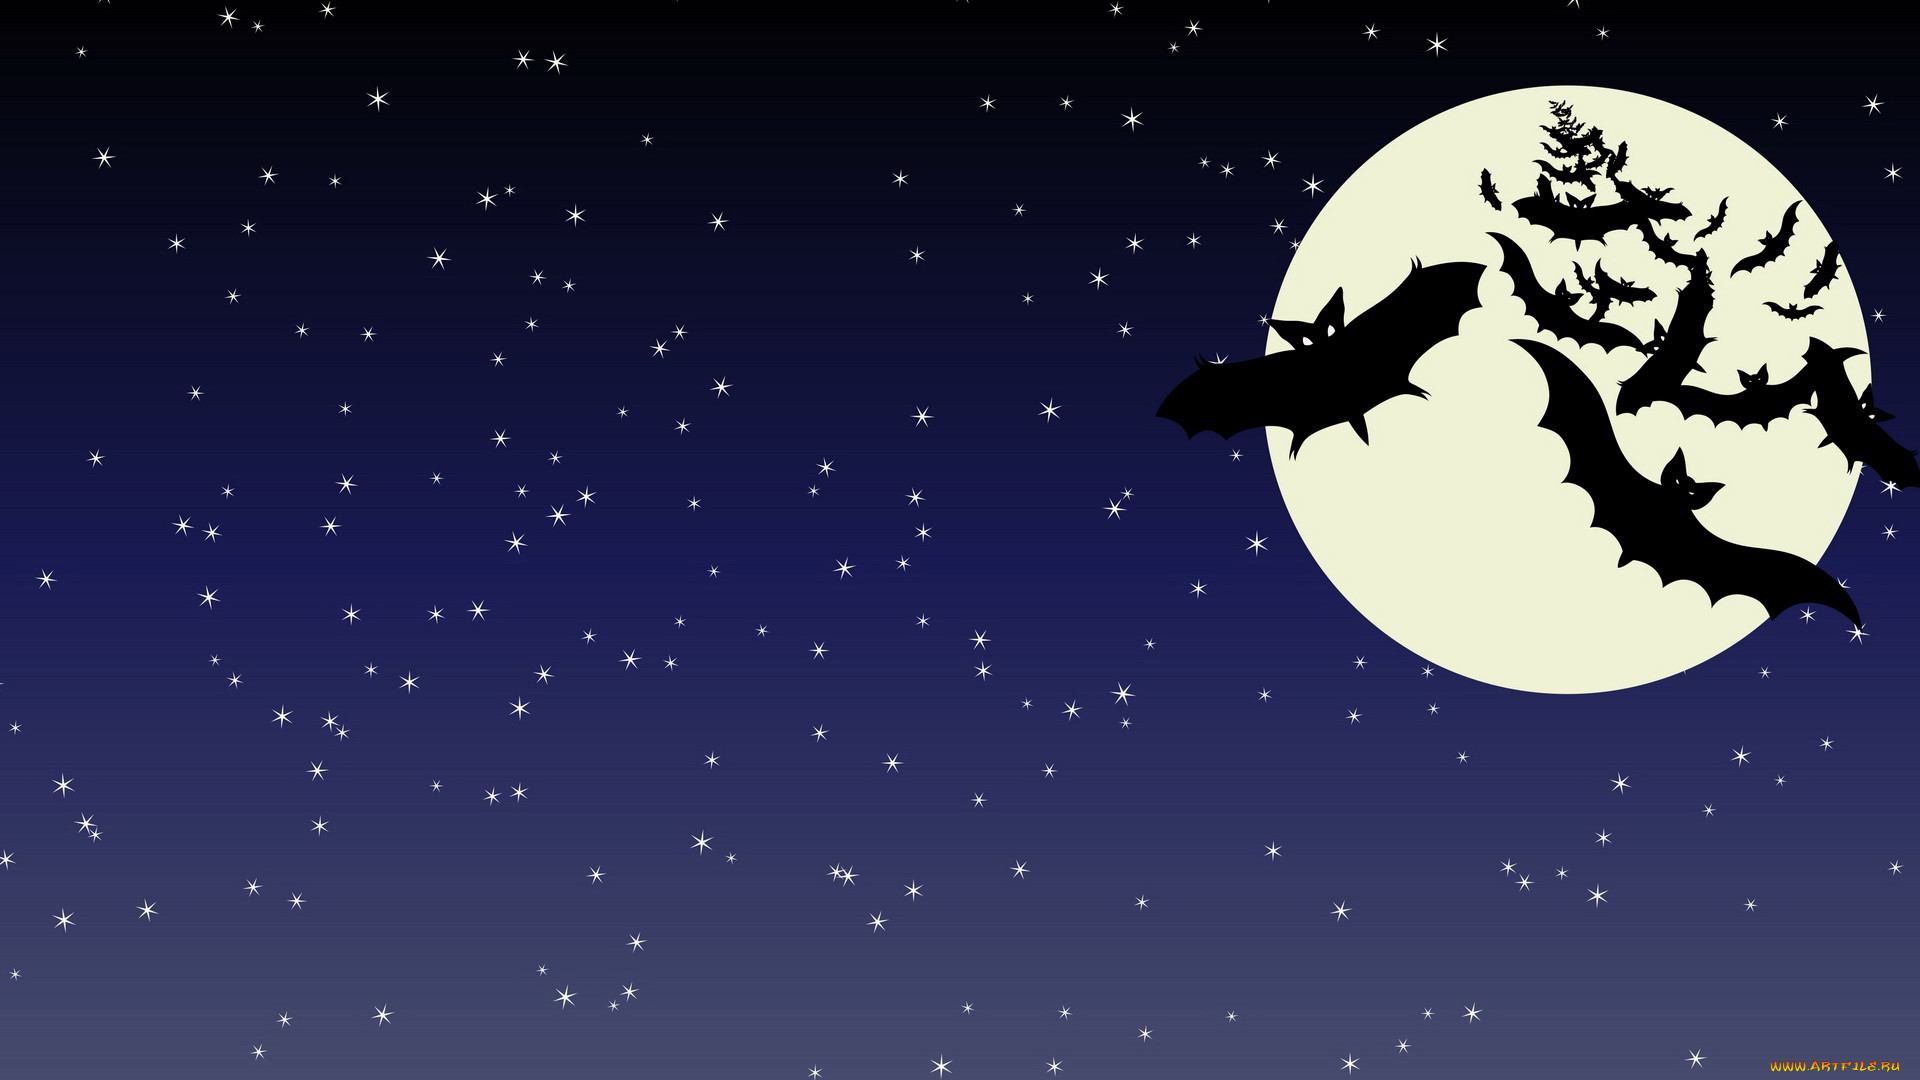 Halloween Bats windows background